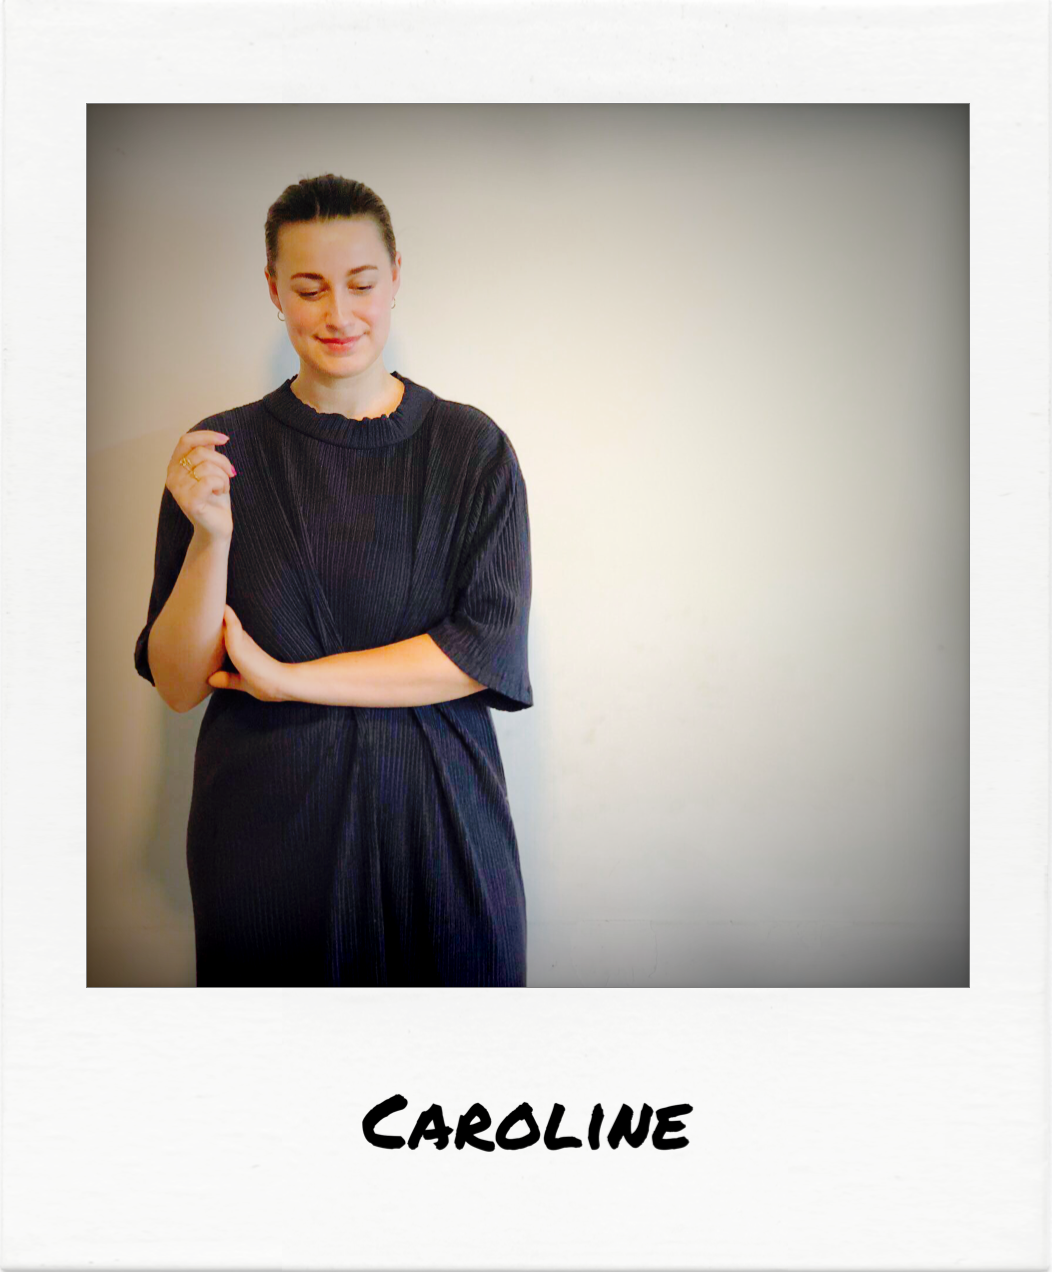 Caroline, 27, studies IMK at CBS